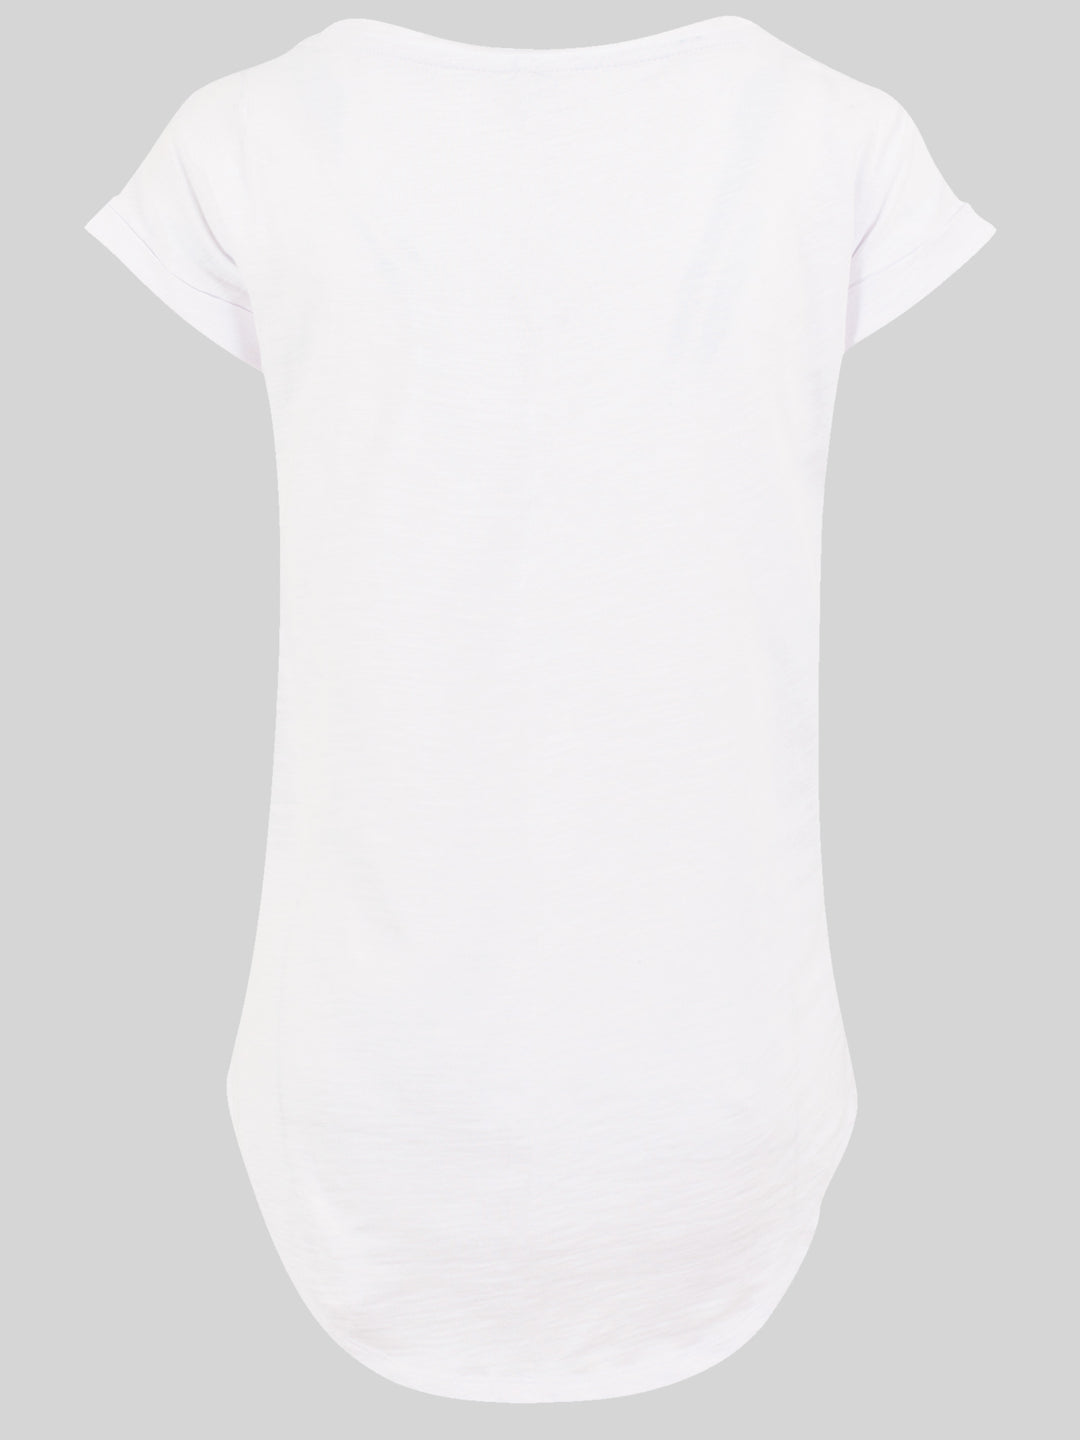 Pink Floyd T-Shirt | Animal Factory | Premium Long Damen T Shirt